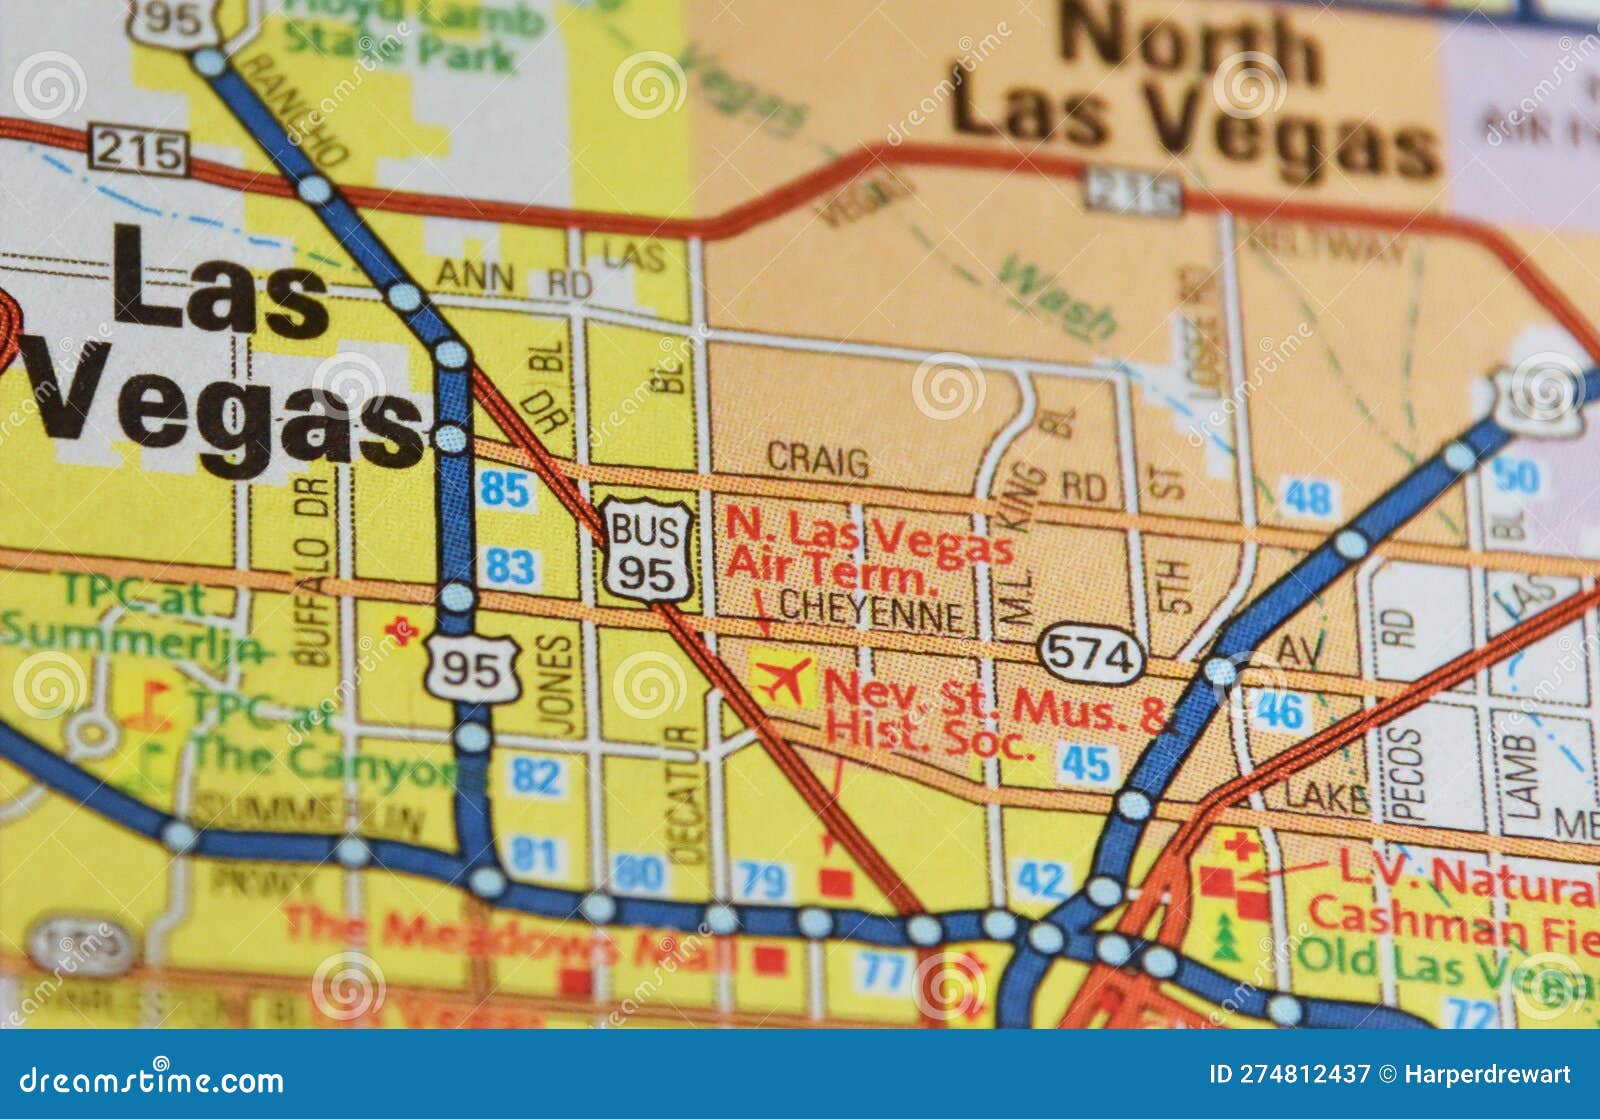 Las Vegas Map : Vintage Las Vegas Map Print Old Las Vegas 